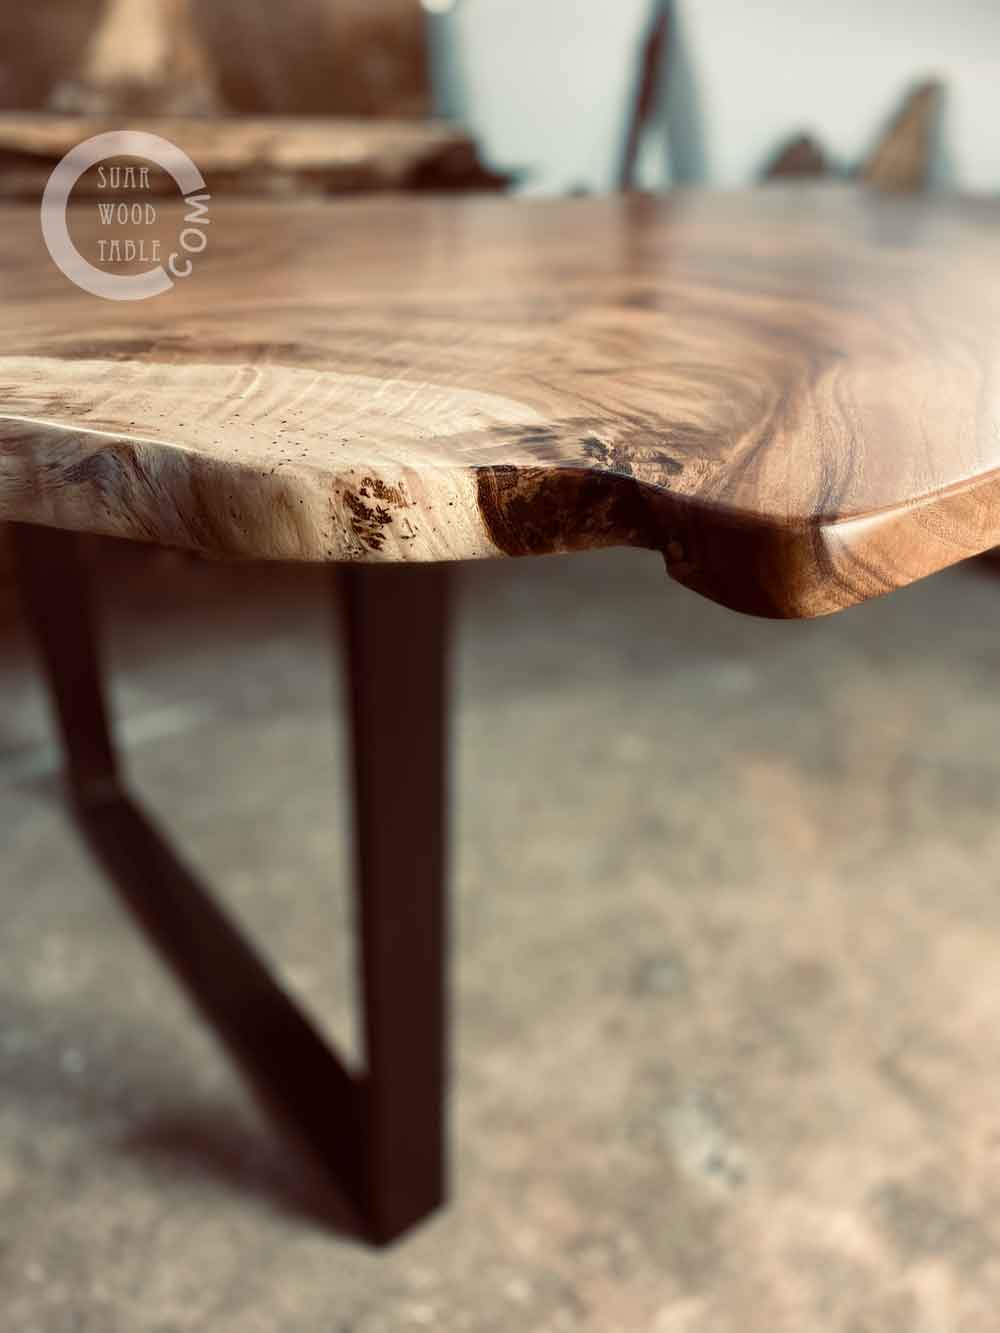 self-made wood table